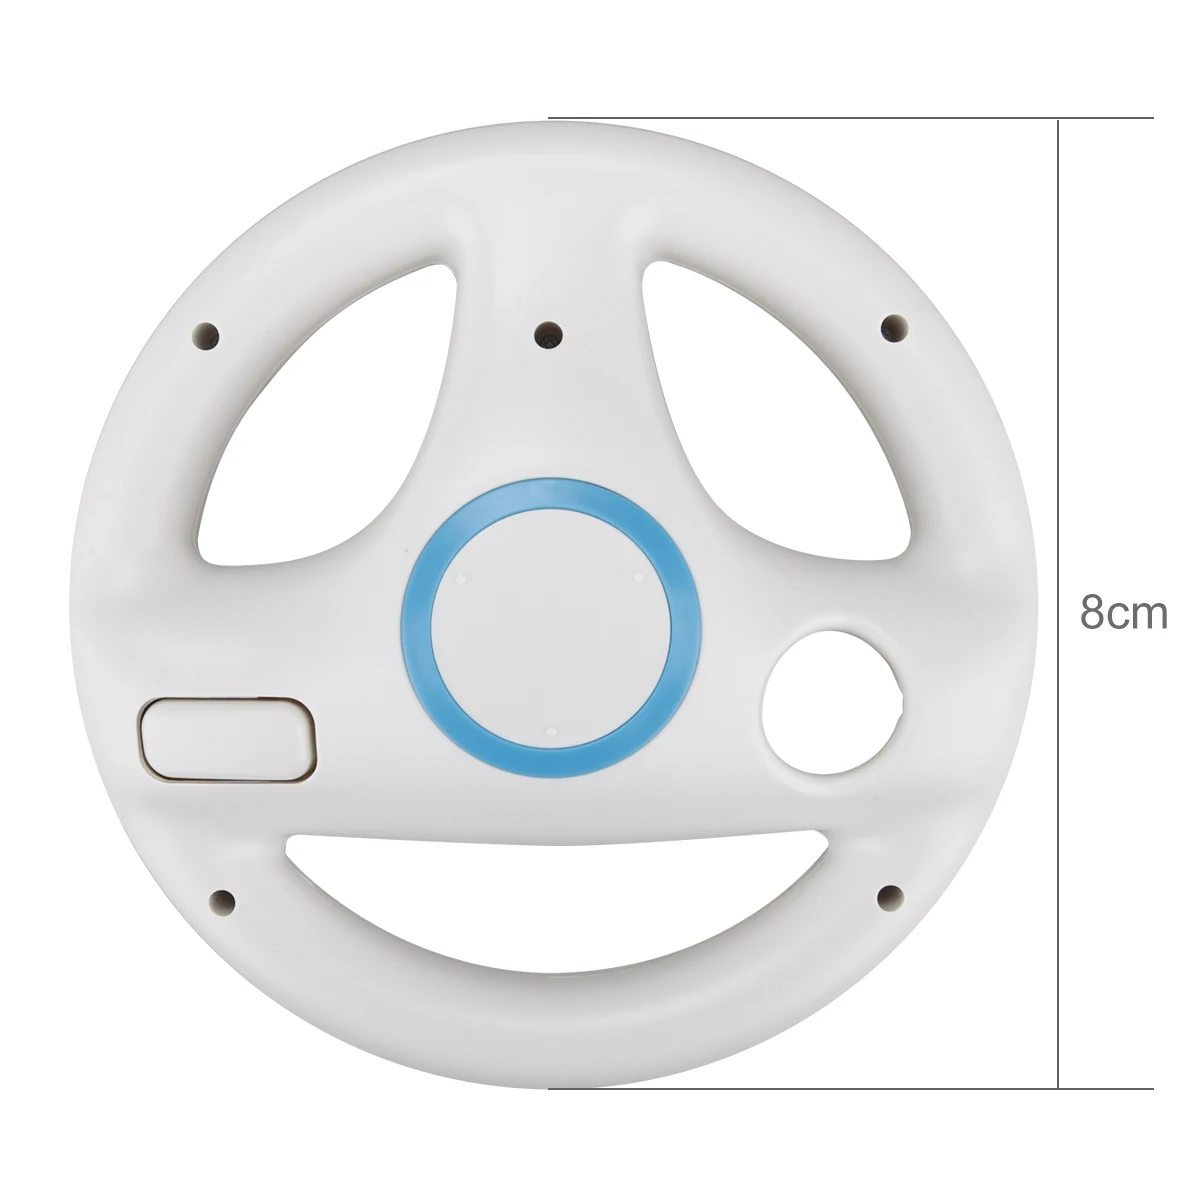 2Pcs Game Racing Steering Wheel for Nintendo Wii Kart Remote Controller Racing Game Steering Wheel images - 6